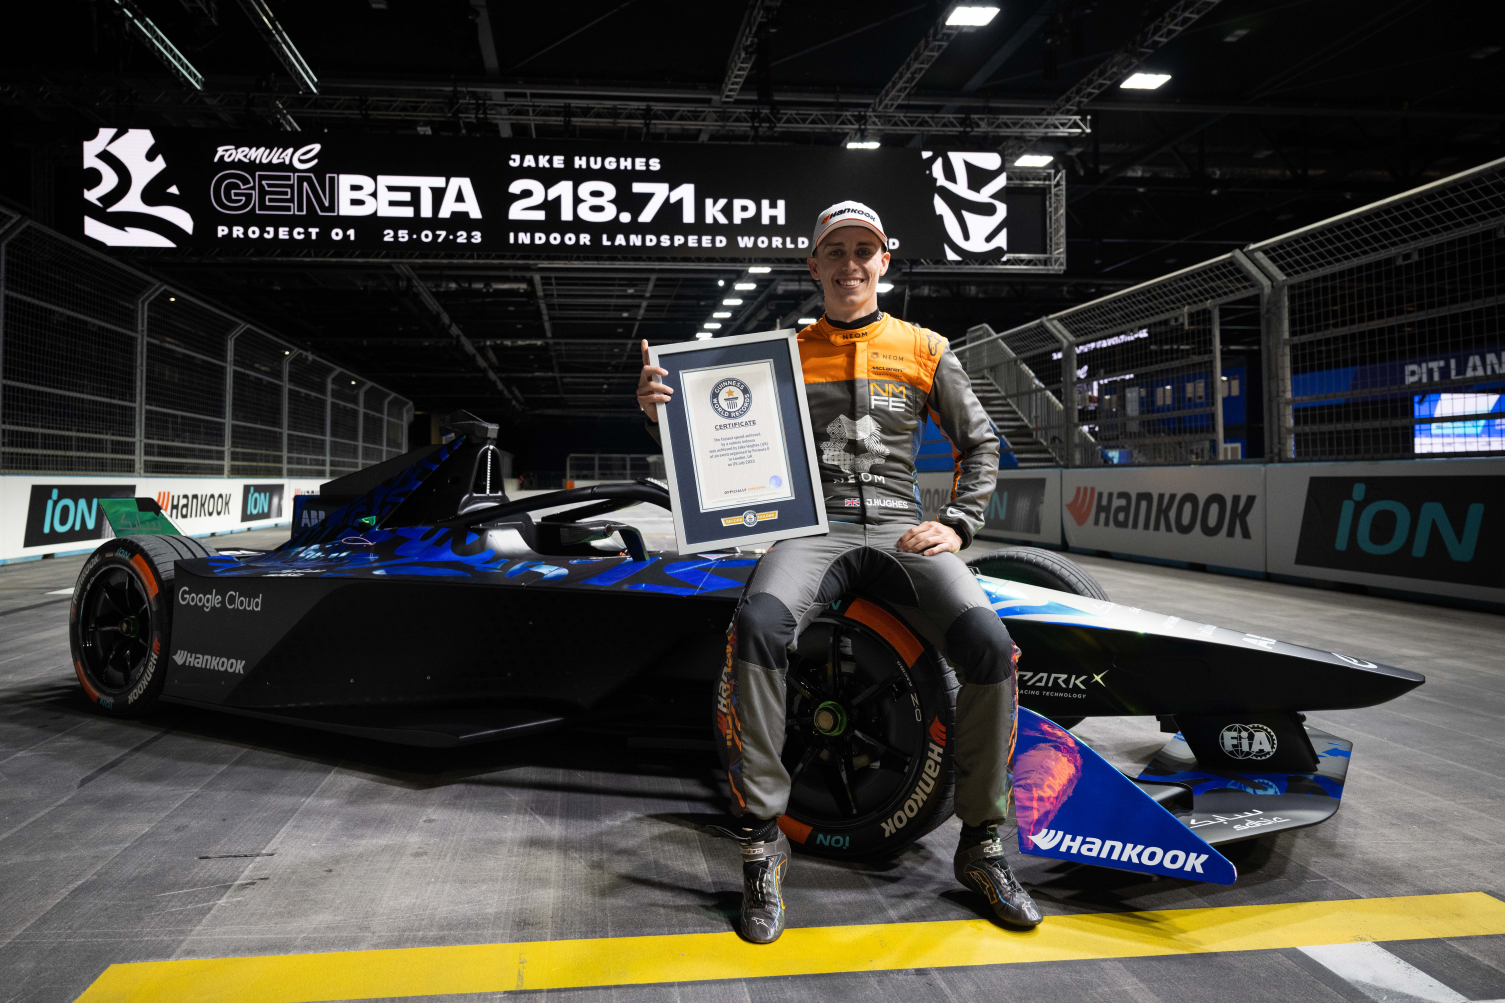 modded formula e car – and mc laren driver – break speed record